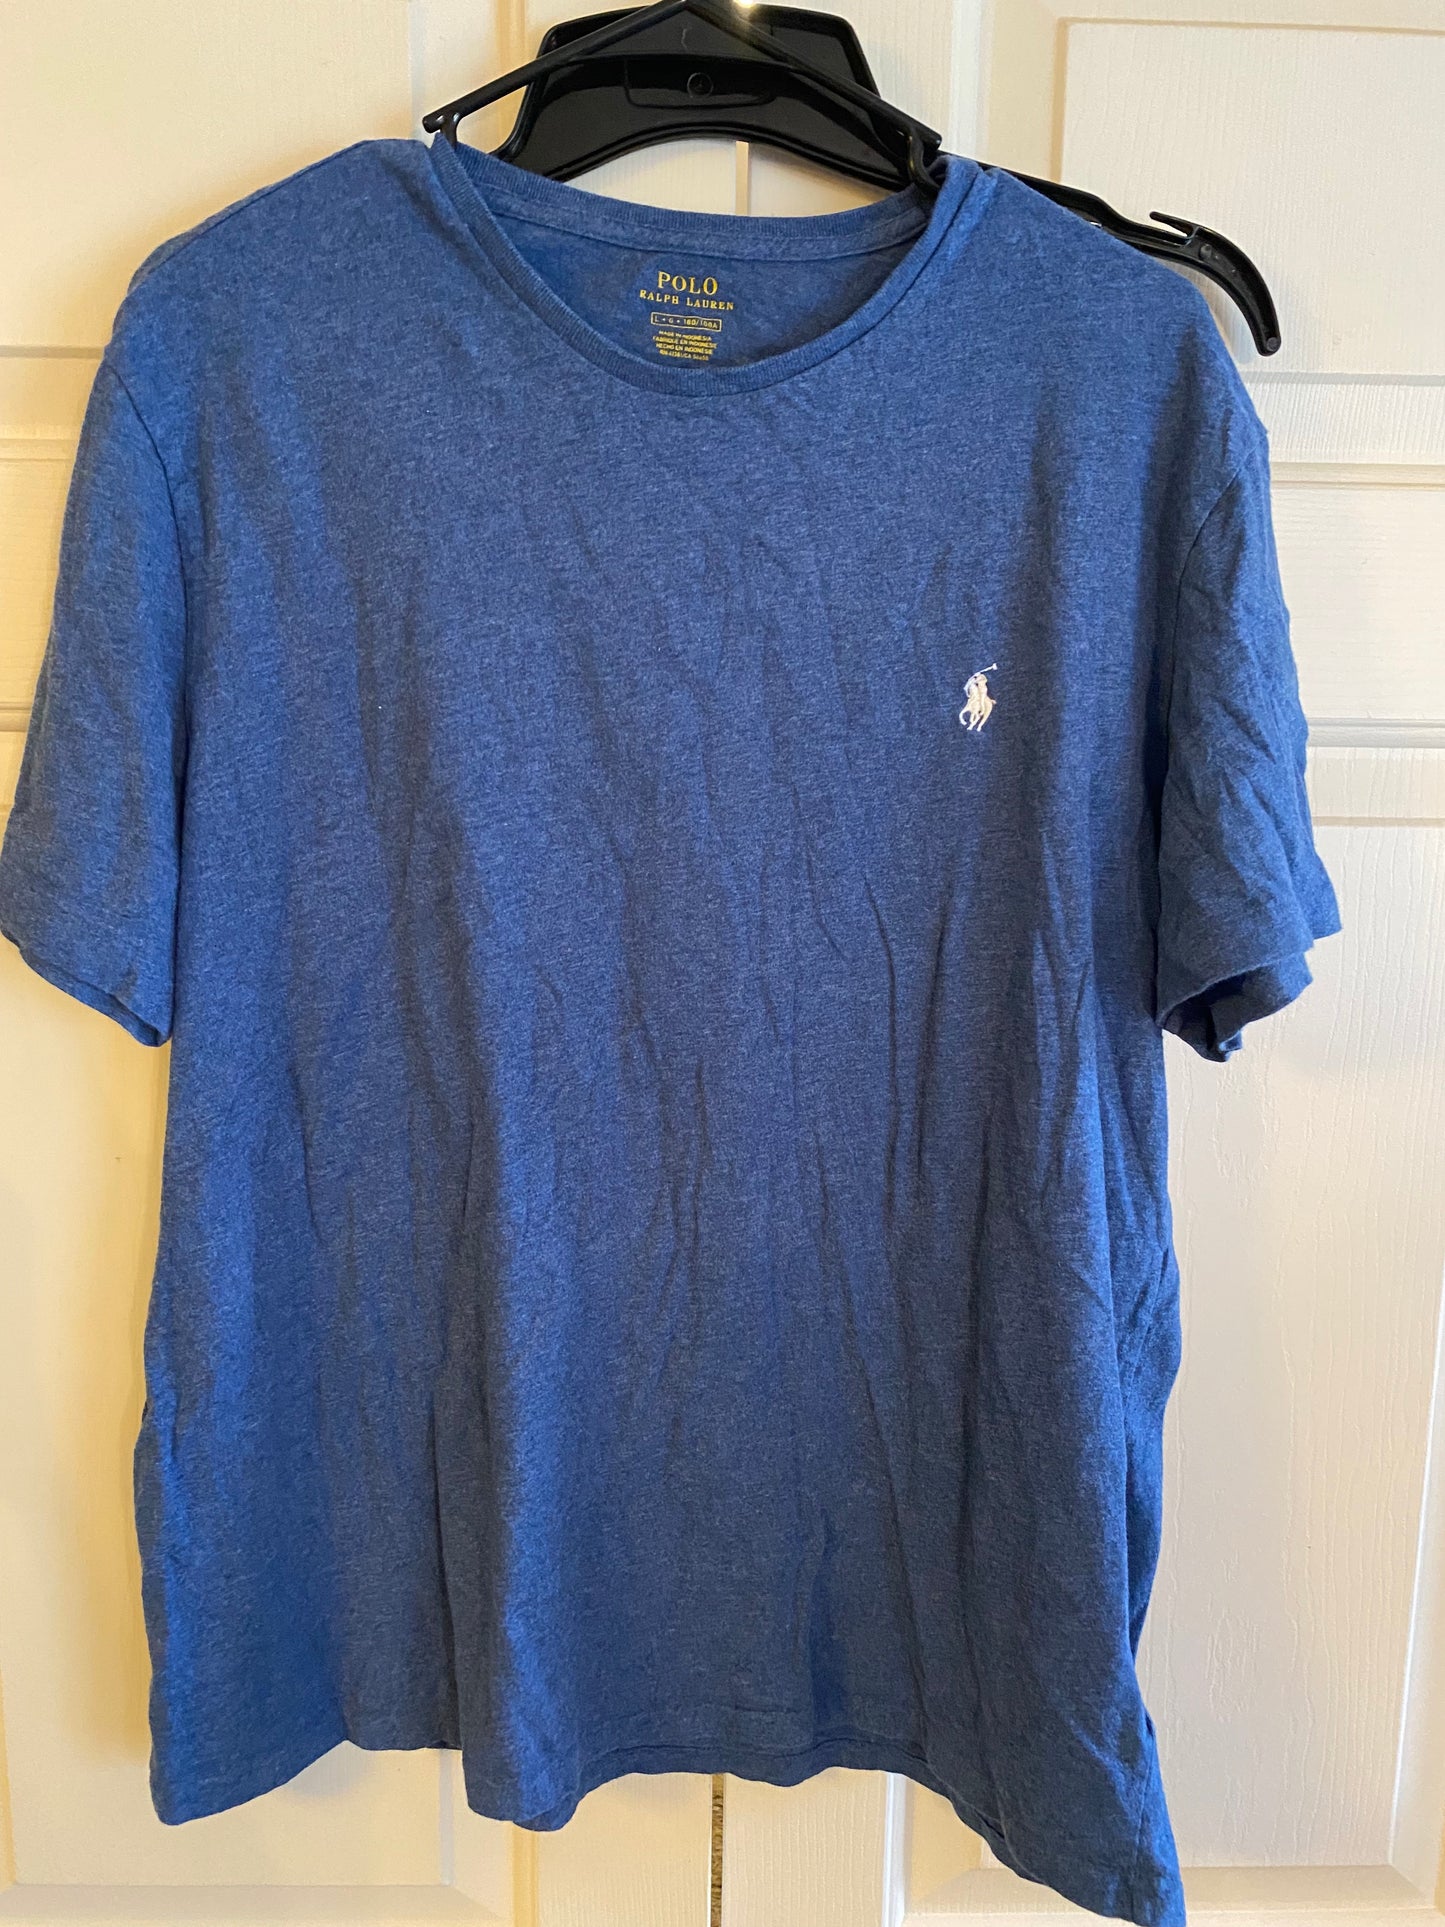 Polo Ralph Lauren Navy Classic Fit Cotton T-Shirt Sz Large L with Logo